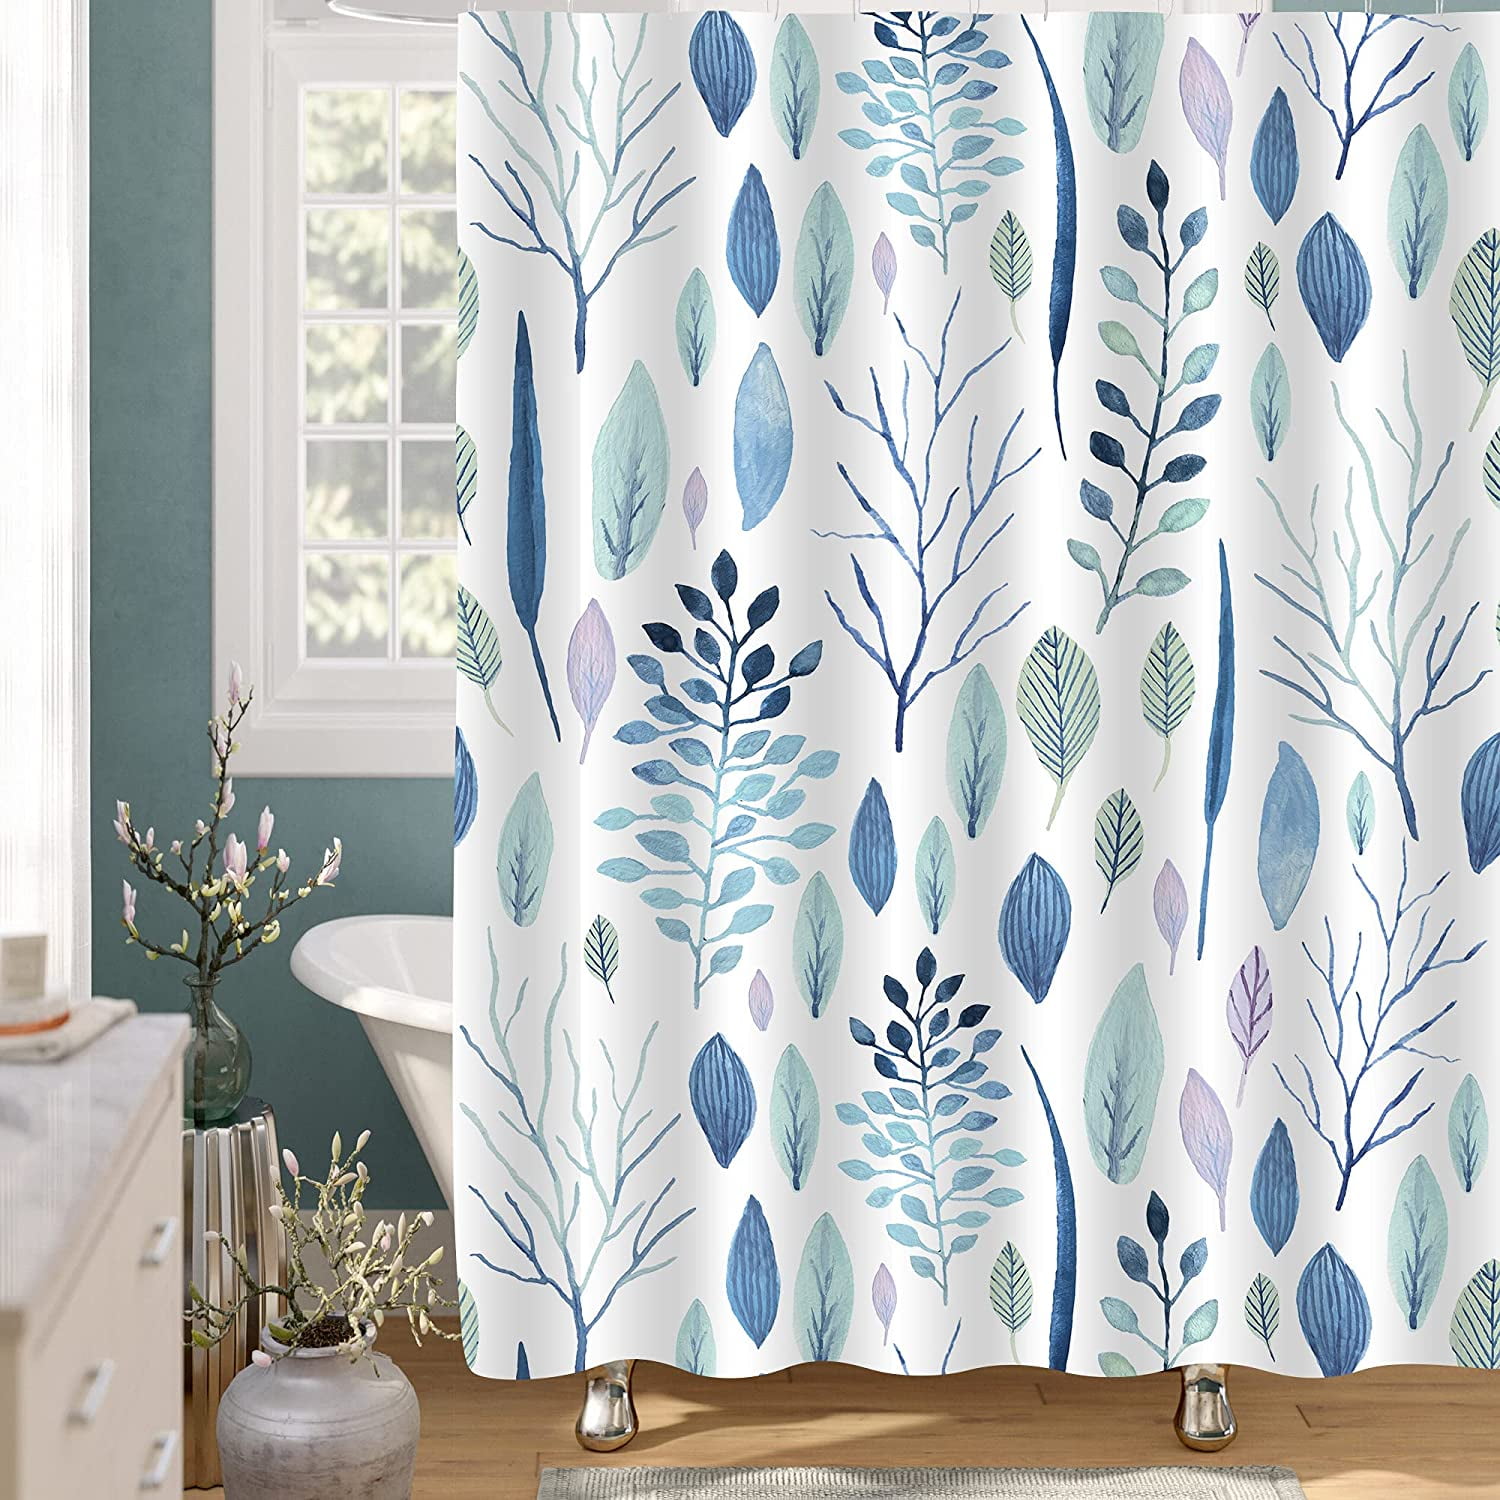 Tropical Green Plants Waterproof Fabric Shower Curtain Bath Accessory Sets